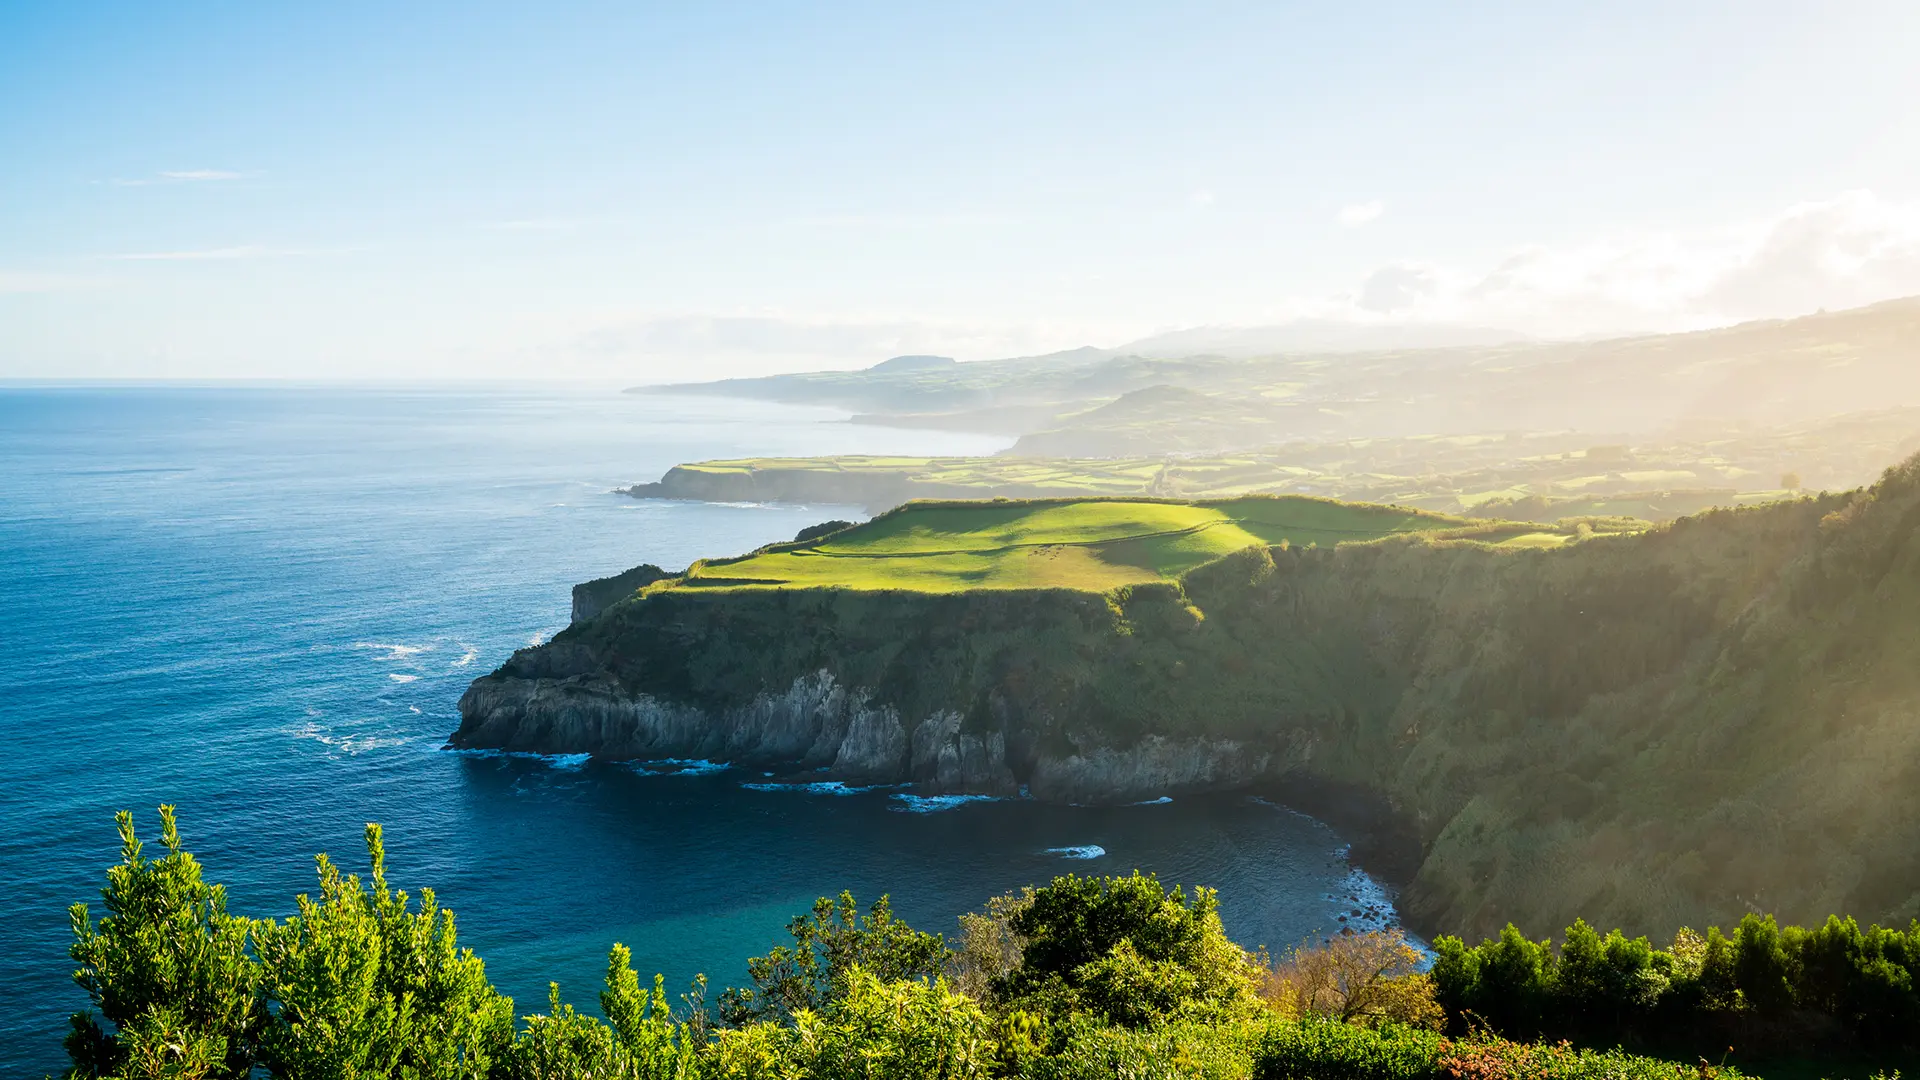 Portugal golf holidays - Golfe da Ilha Terceira Azores - Photo 2